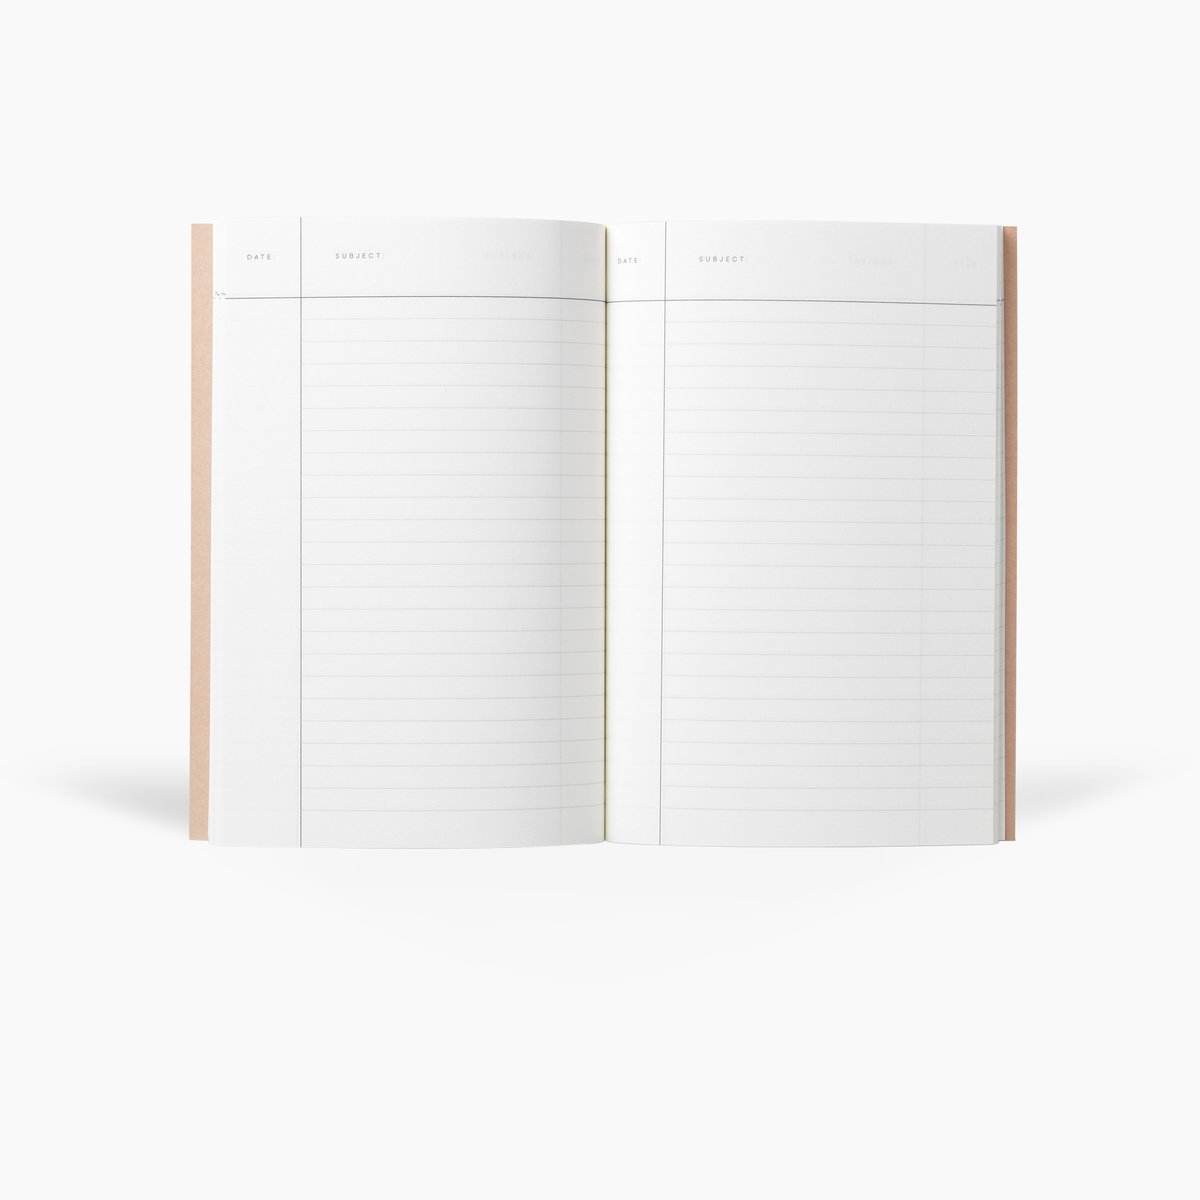 Notem VITA Softcover Notebook - Small - Athol Blue / Grey